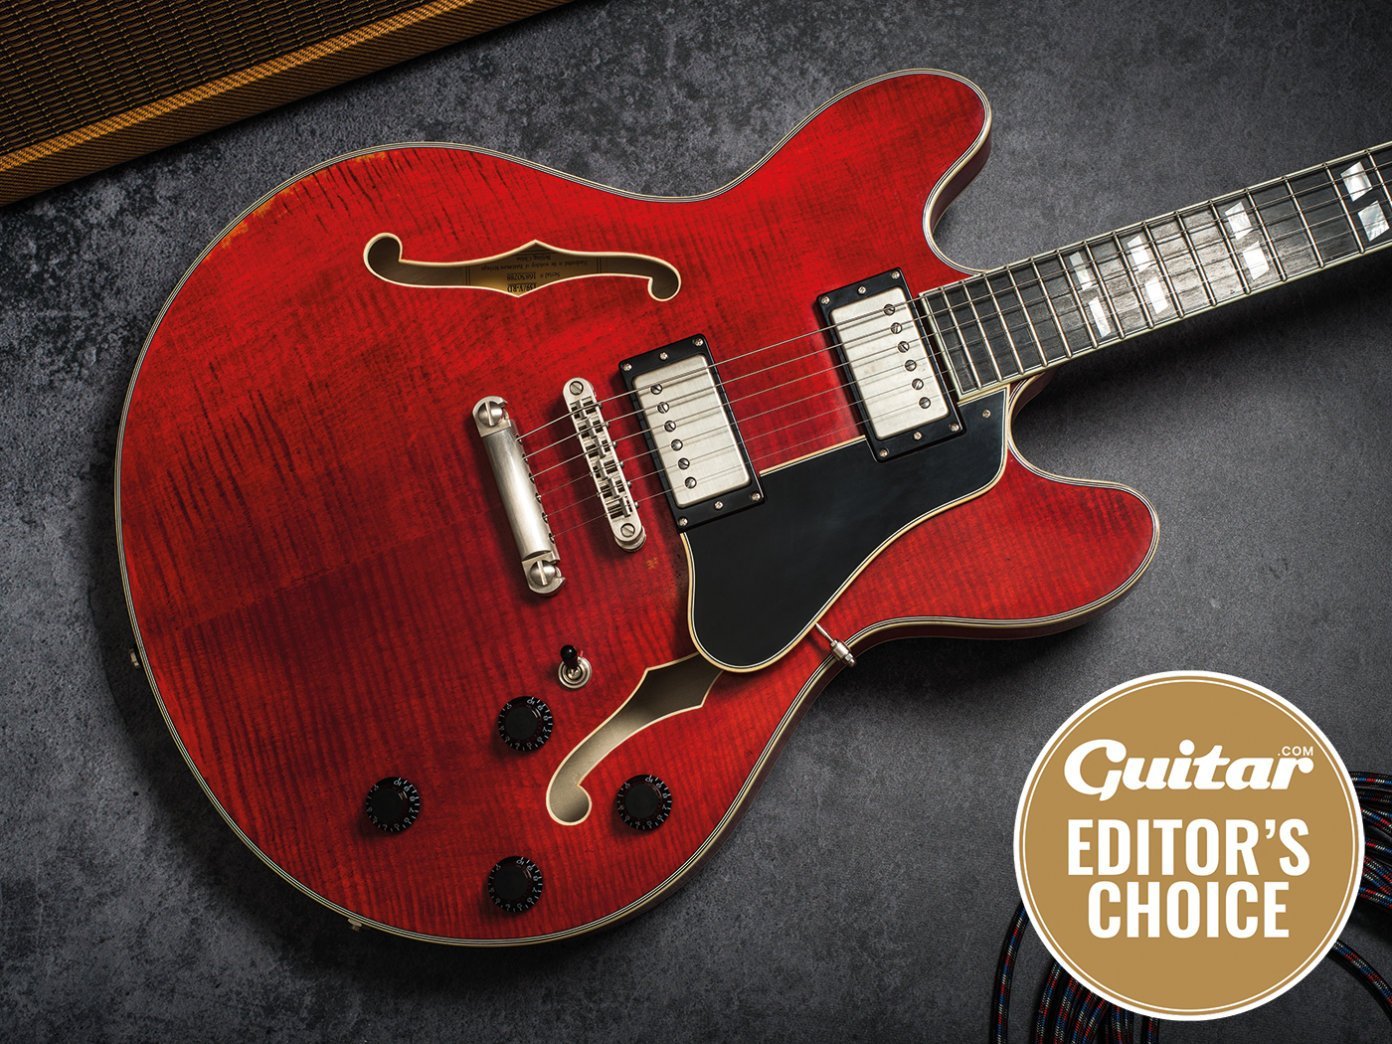 Eastman T59/v Red, Electric Guitar for sale at Richards Guitars.